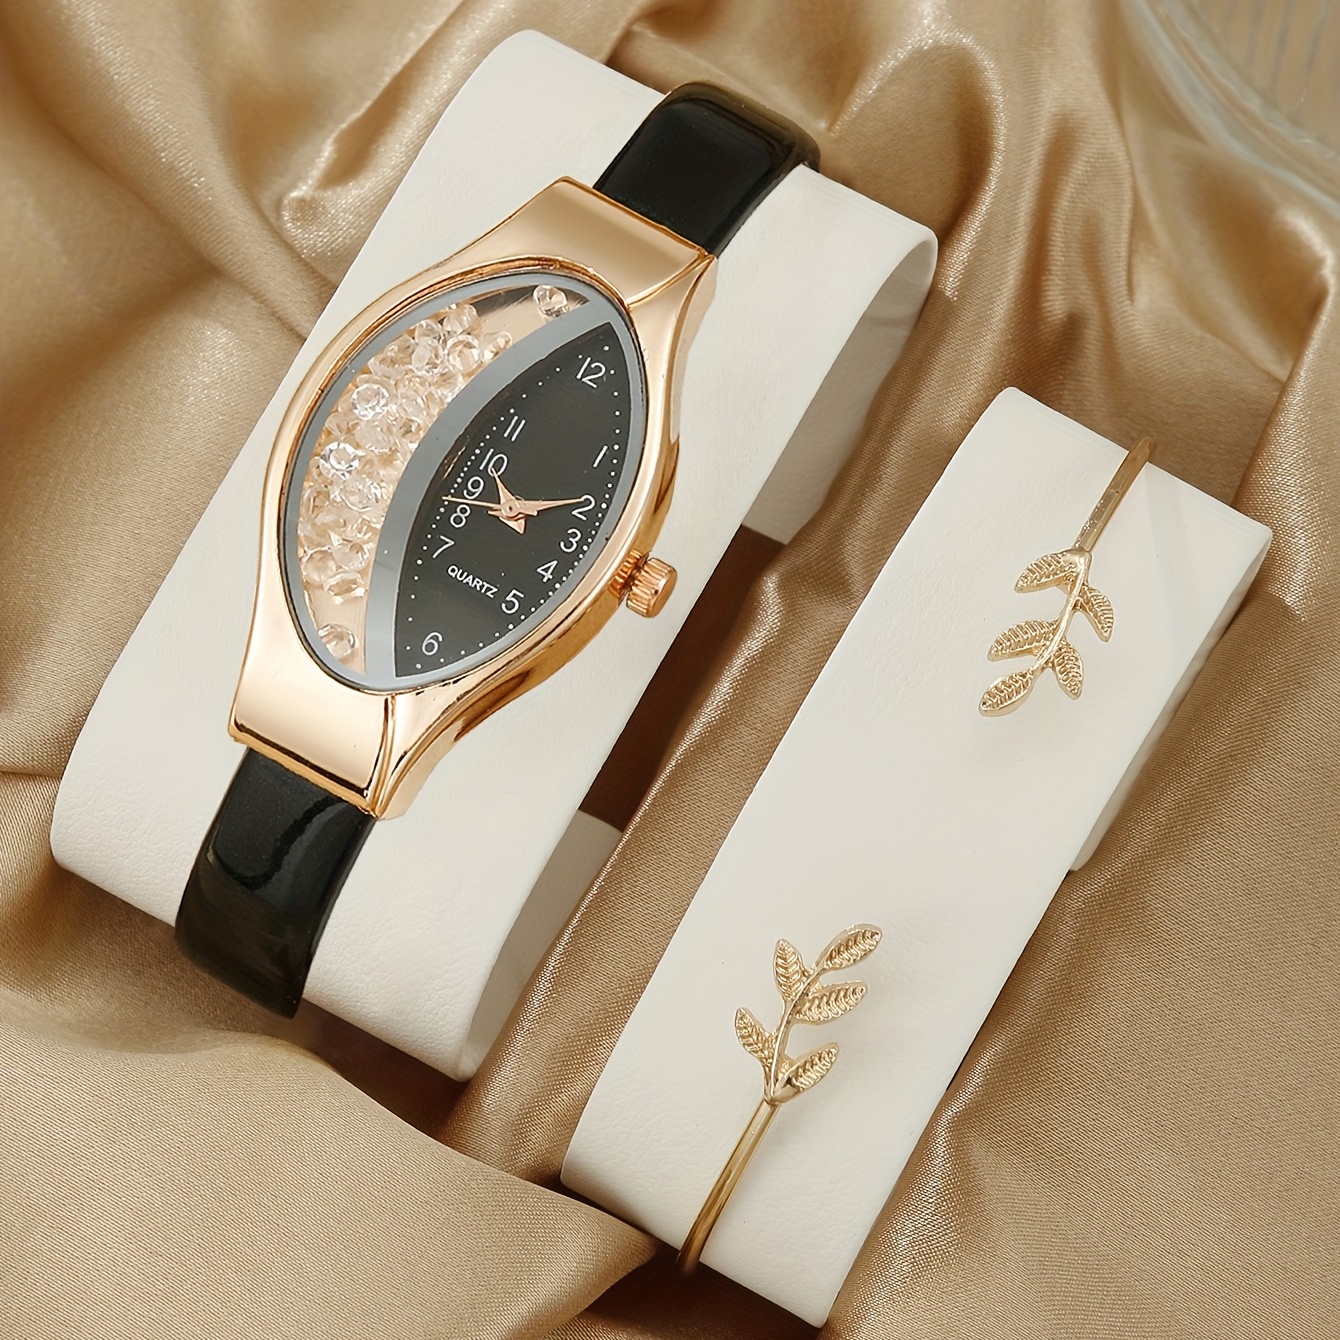 

Quicksand Oval Pointer Quartz Watch Casual Fashion Analog Wrist Watch & 1pc Leaf Bangle Cuff, Gift For Women Her